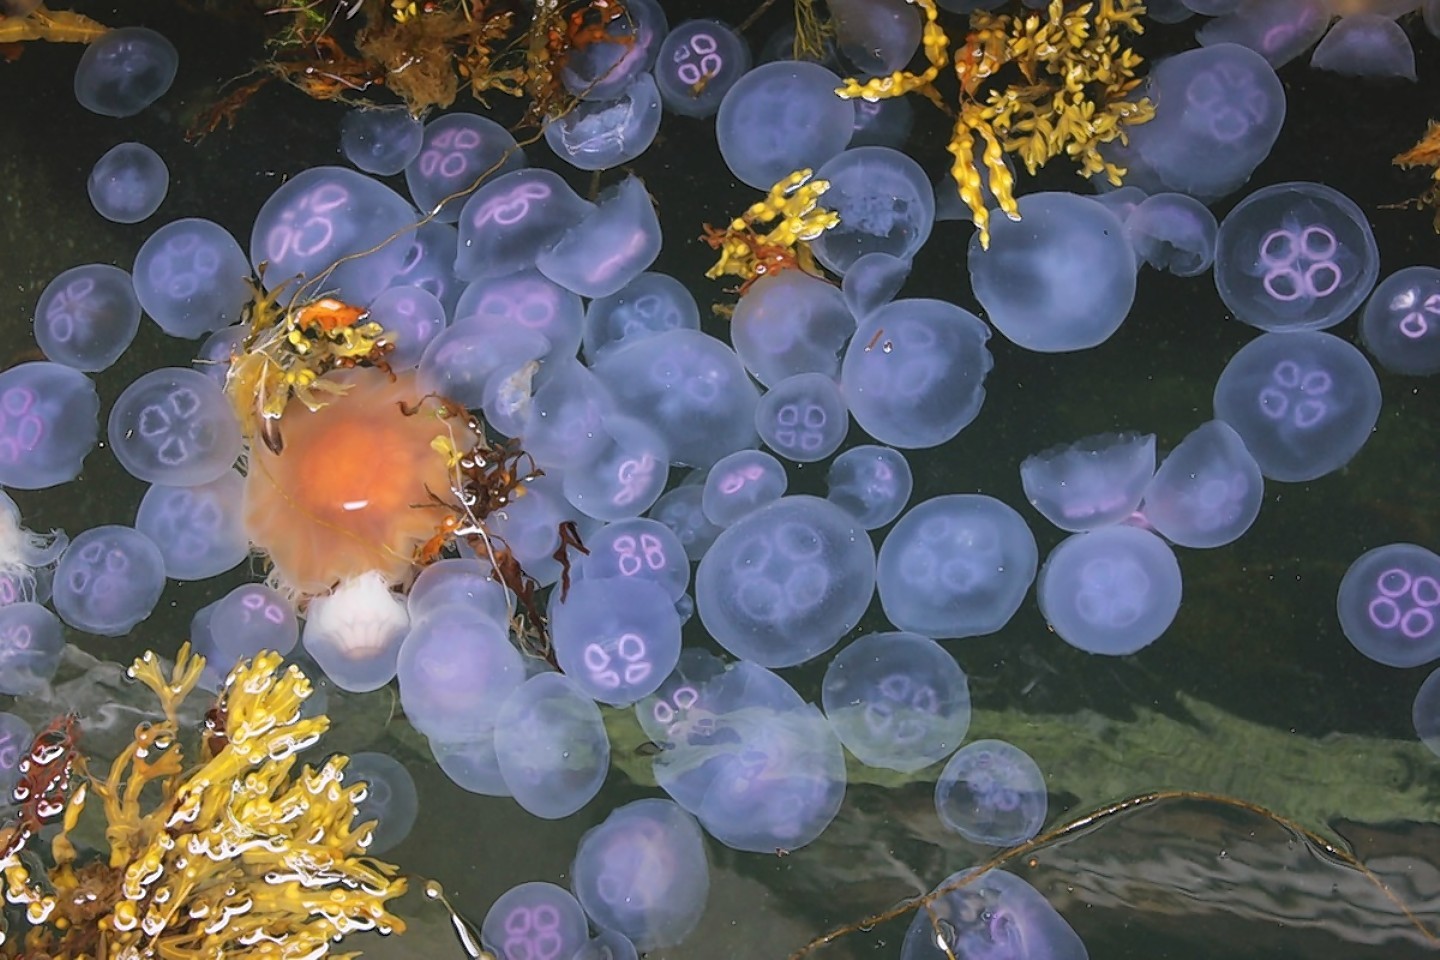 The jellyfish invasion